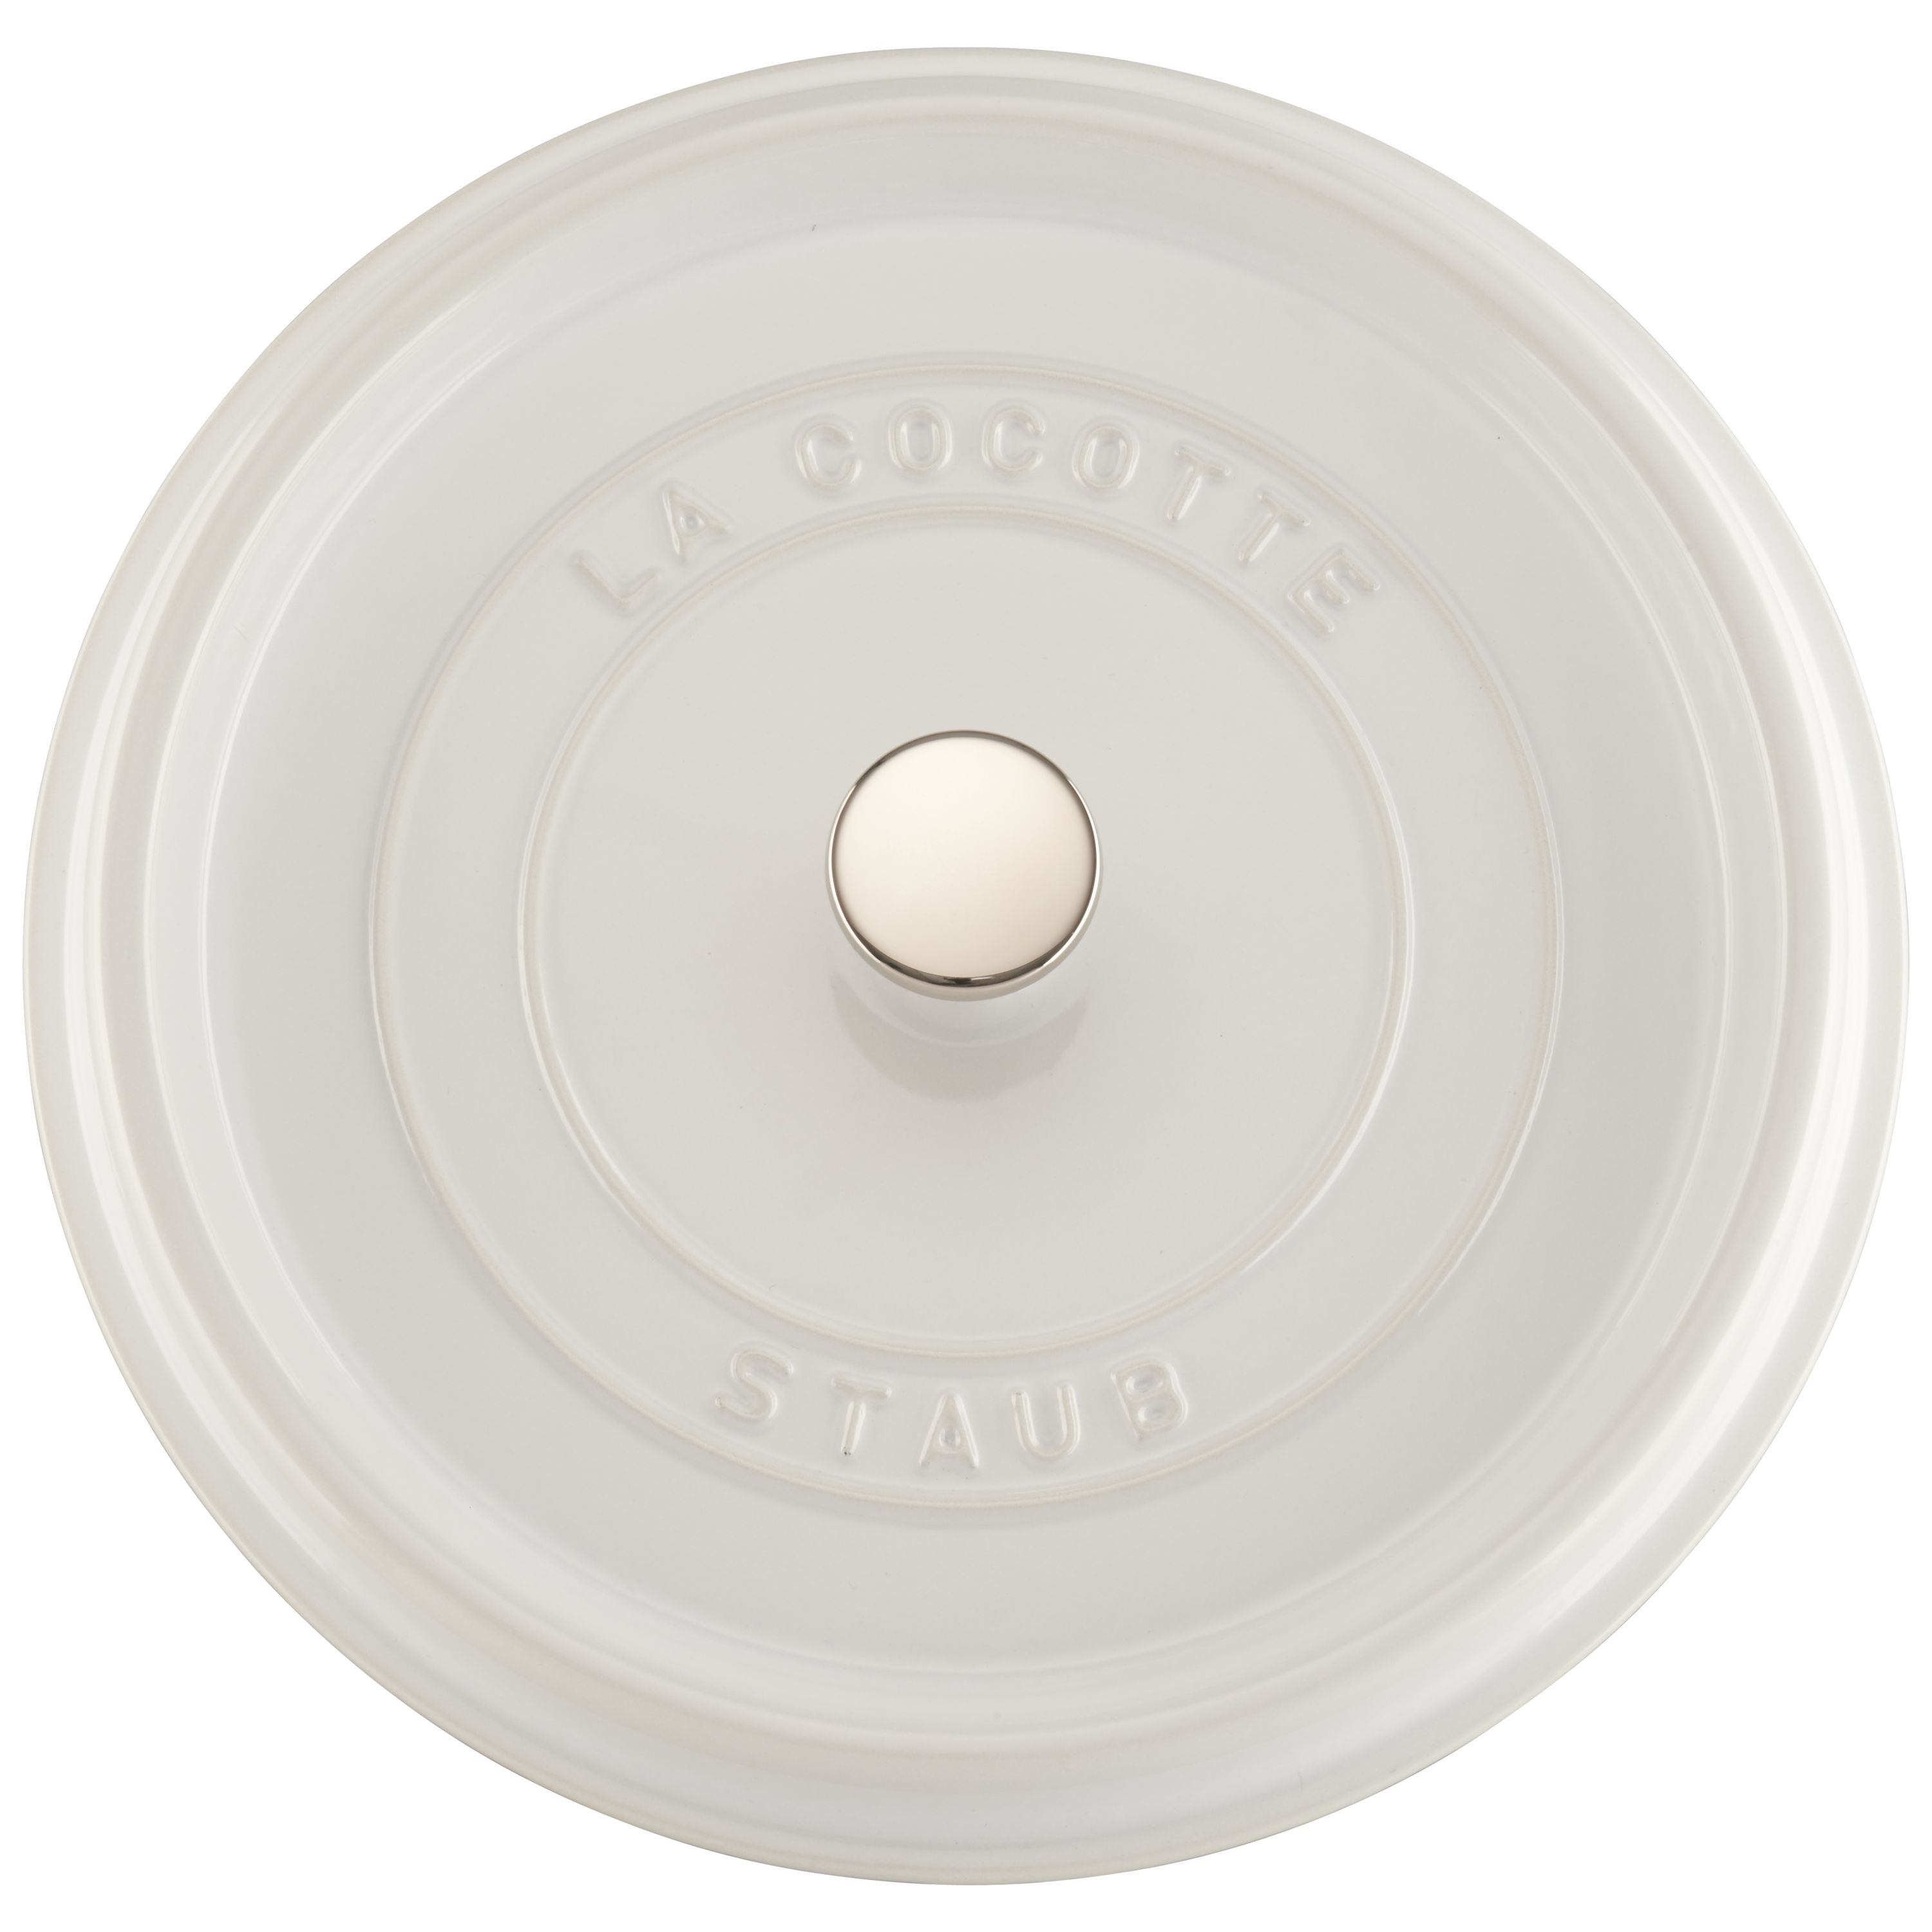 Jenni Kayne x Staub Round Cocotte in White Size 5.5 qt